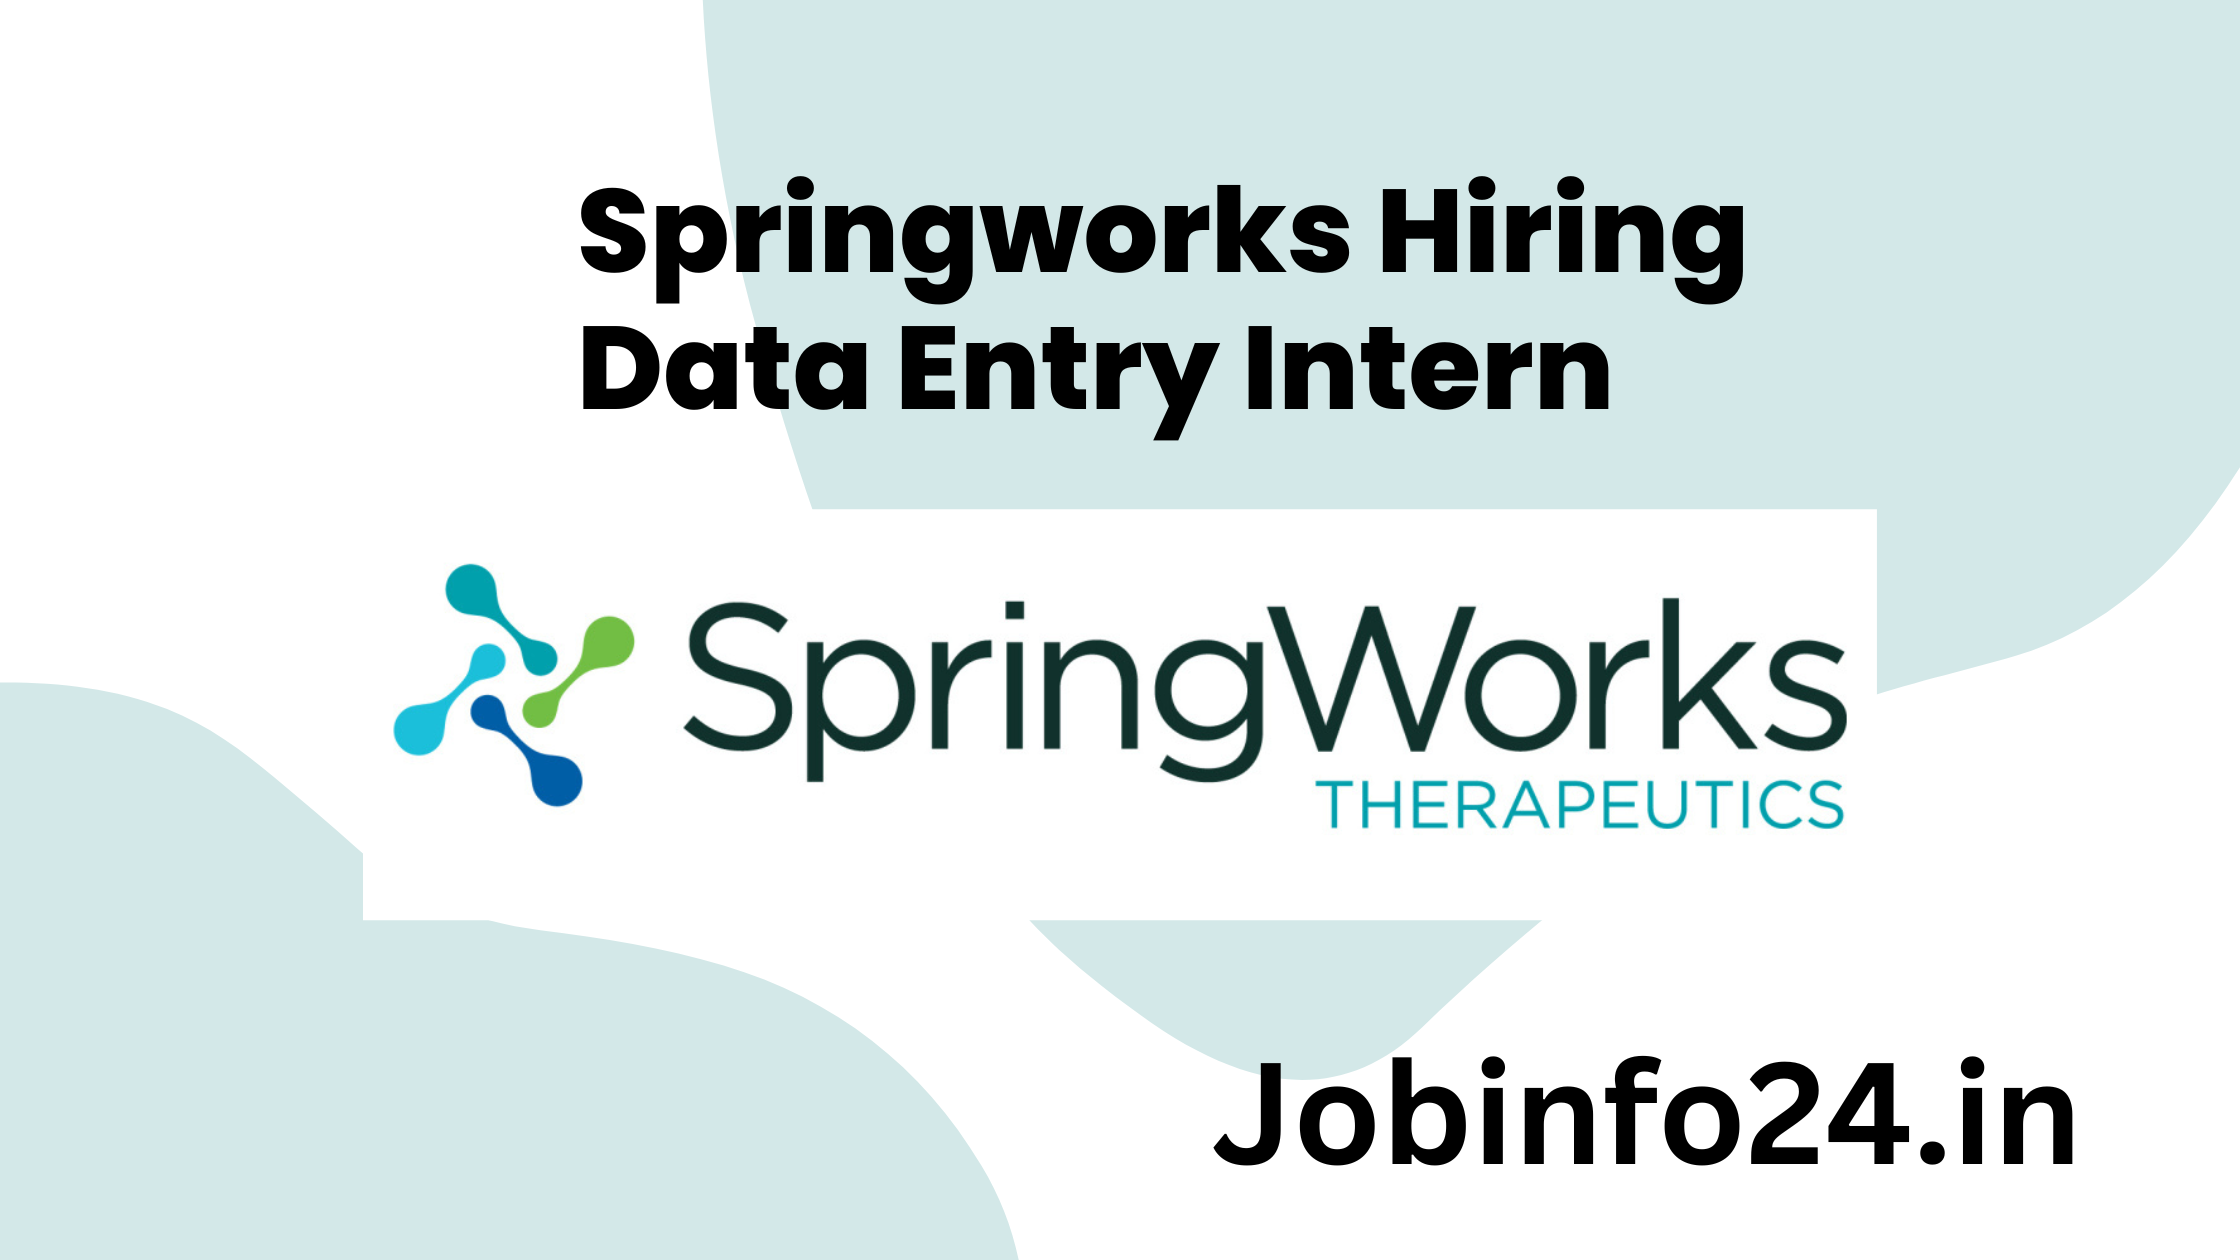 Springworks Hiring Data Entry Intern